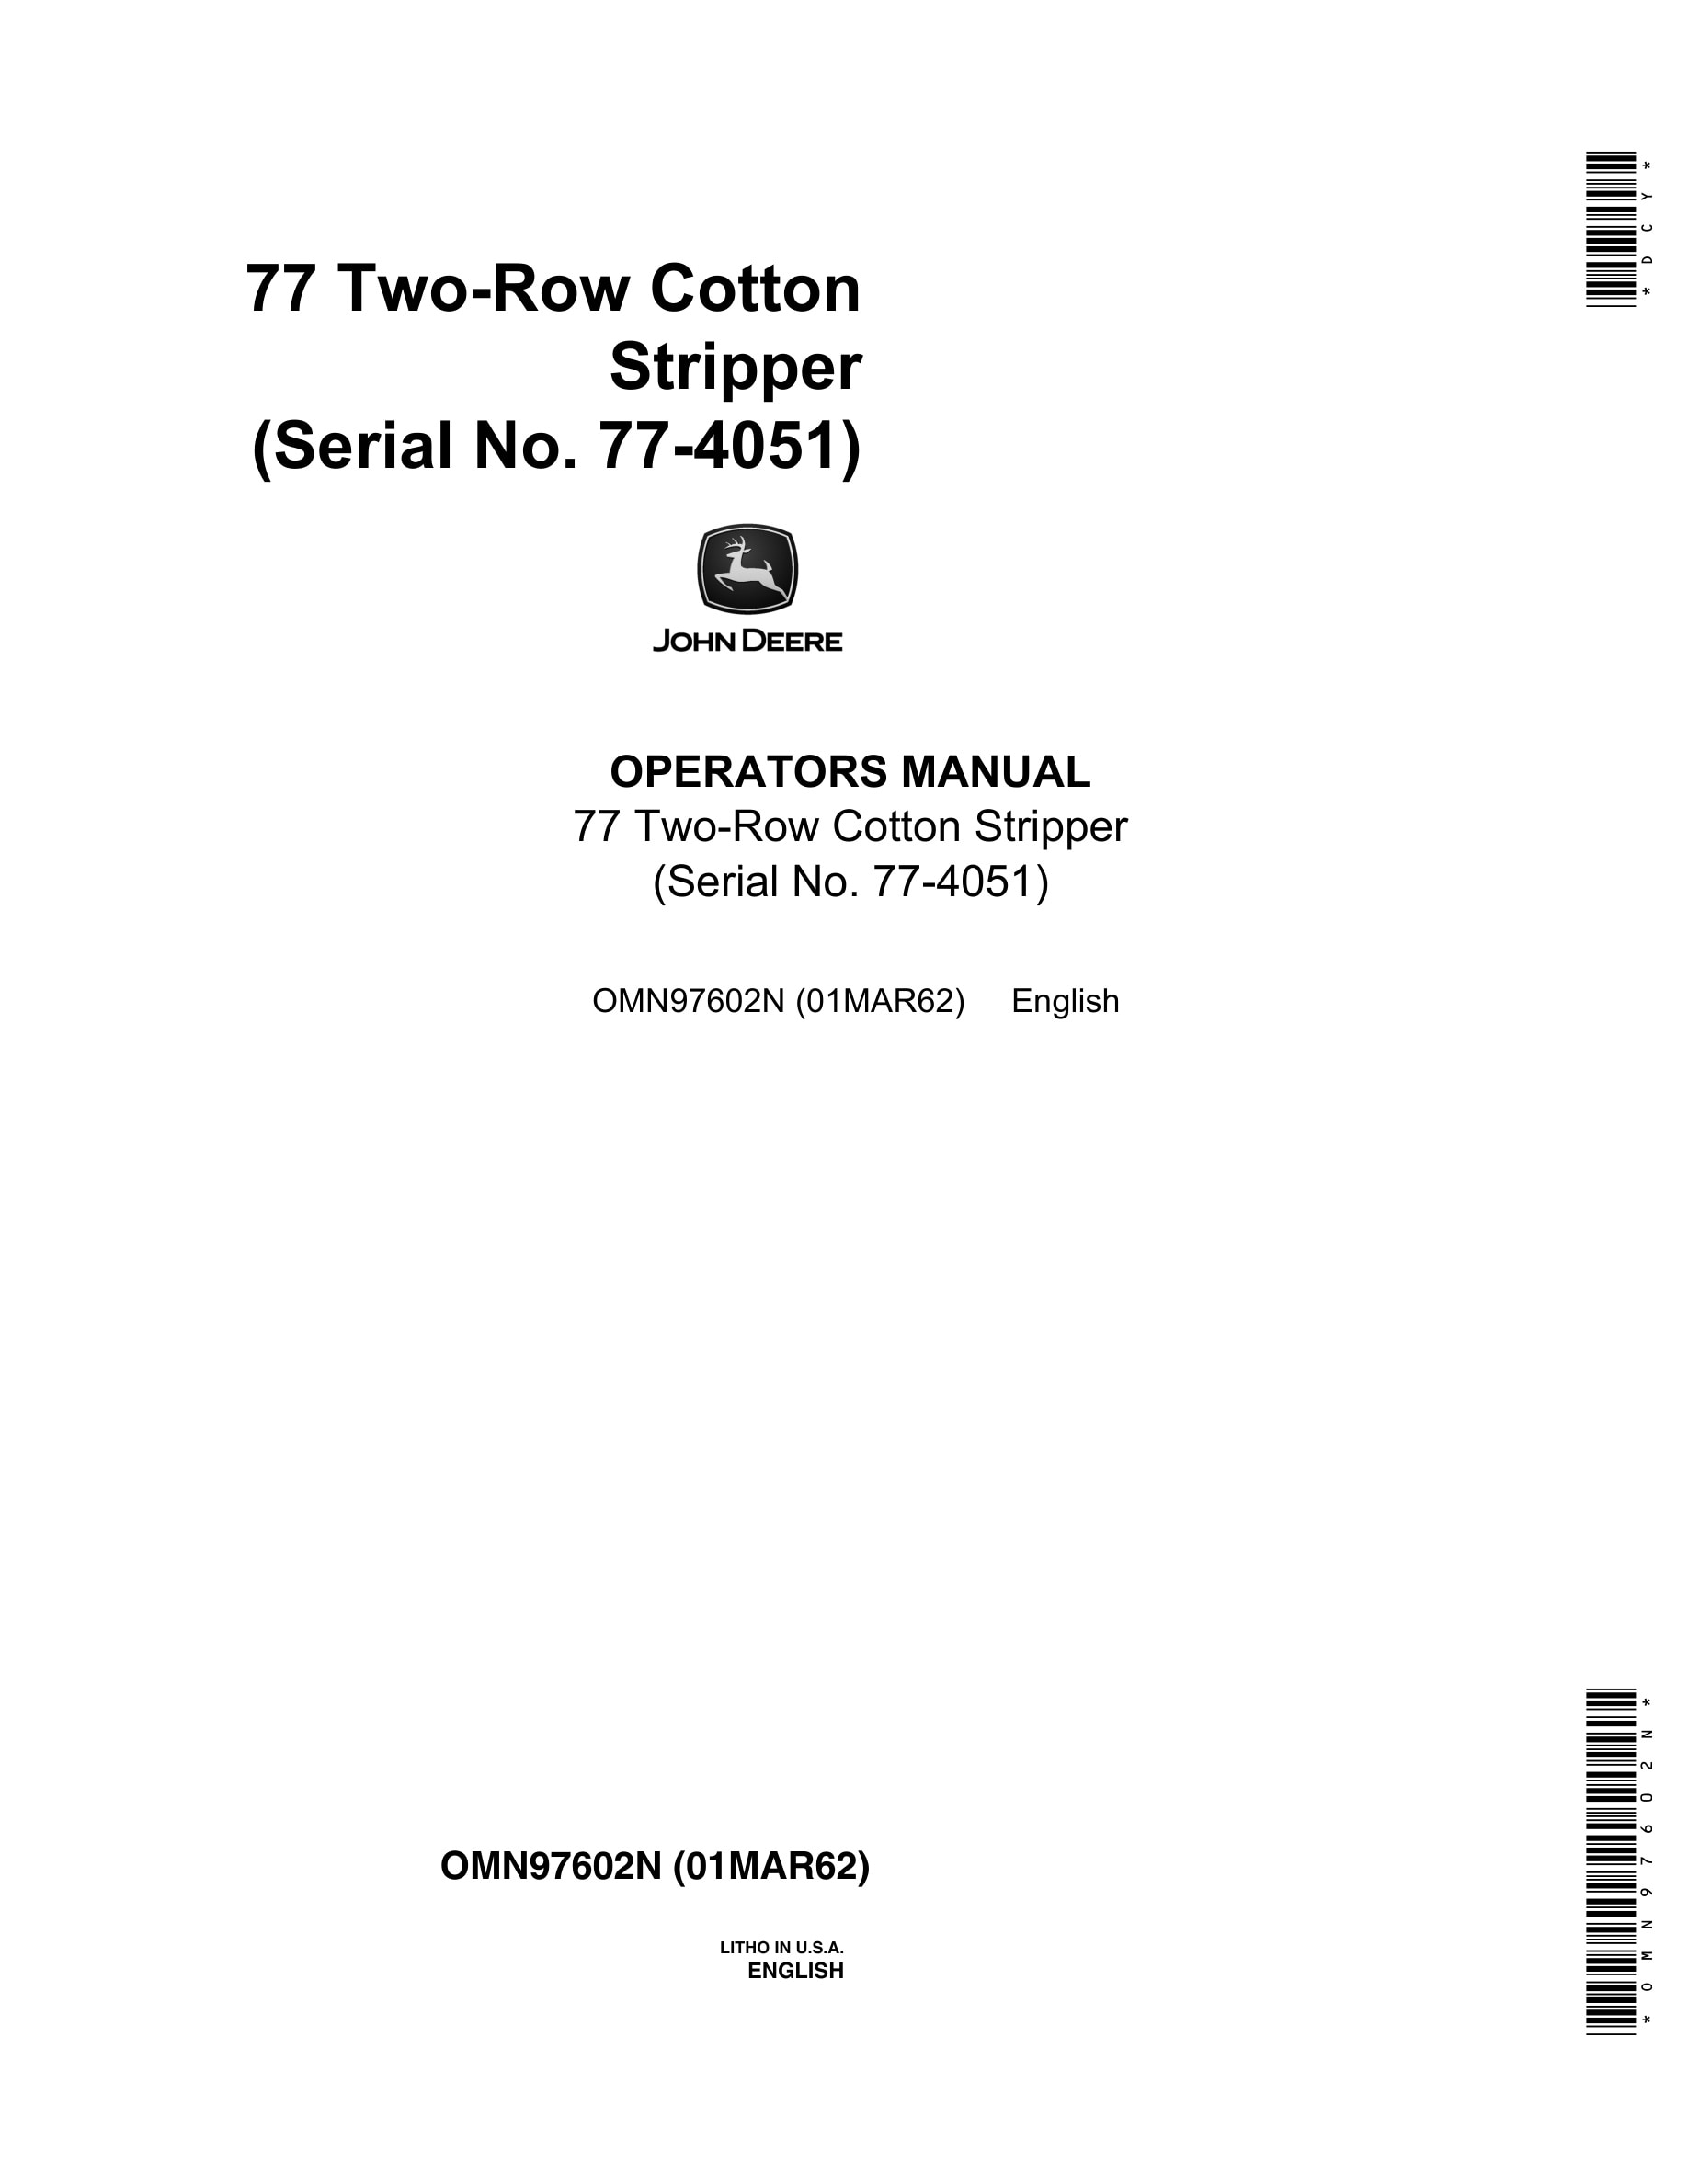 John Deere 77 Two Row Cotton Sripper Operator Manual OMN97602N-1